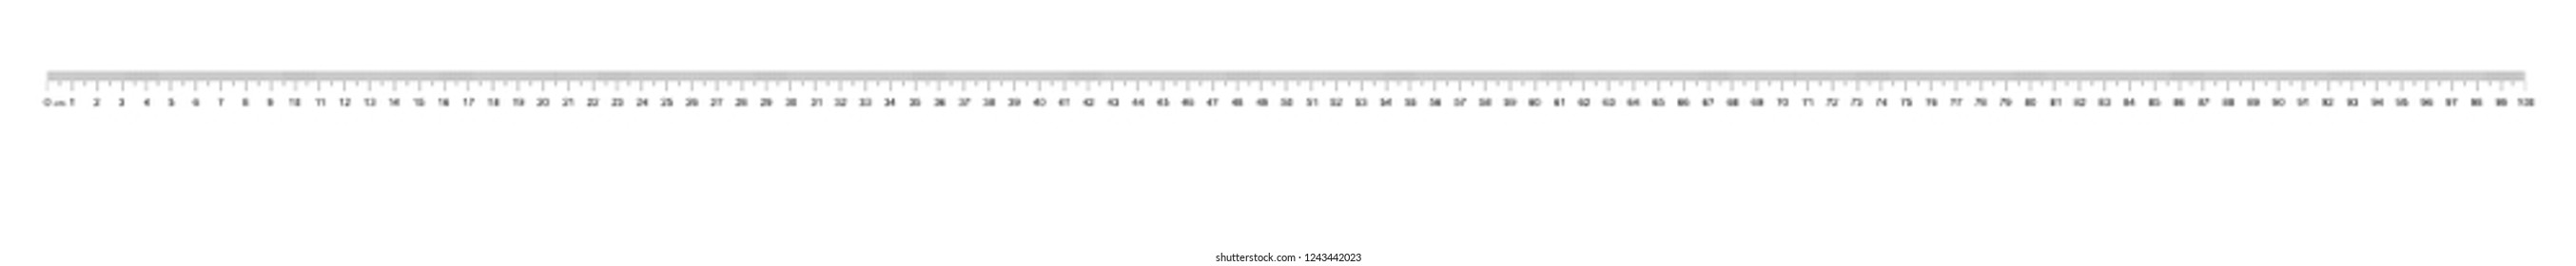 Ruler 100 cm. Measuring tool. Ruler scale 1 meter. Ruler grid 100 cm. Size indicator units. Metric Centimeter size indicators. Vector